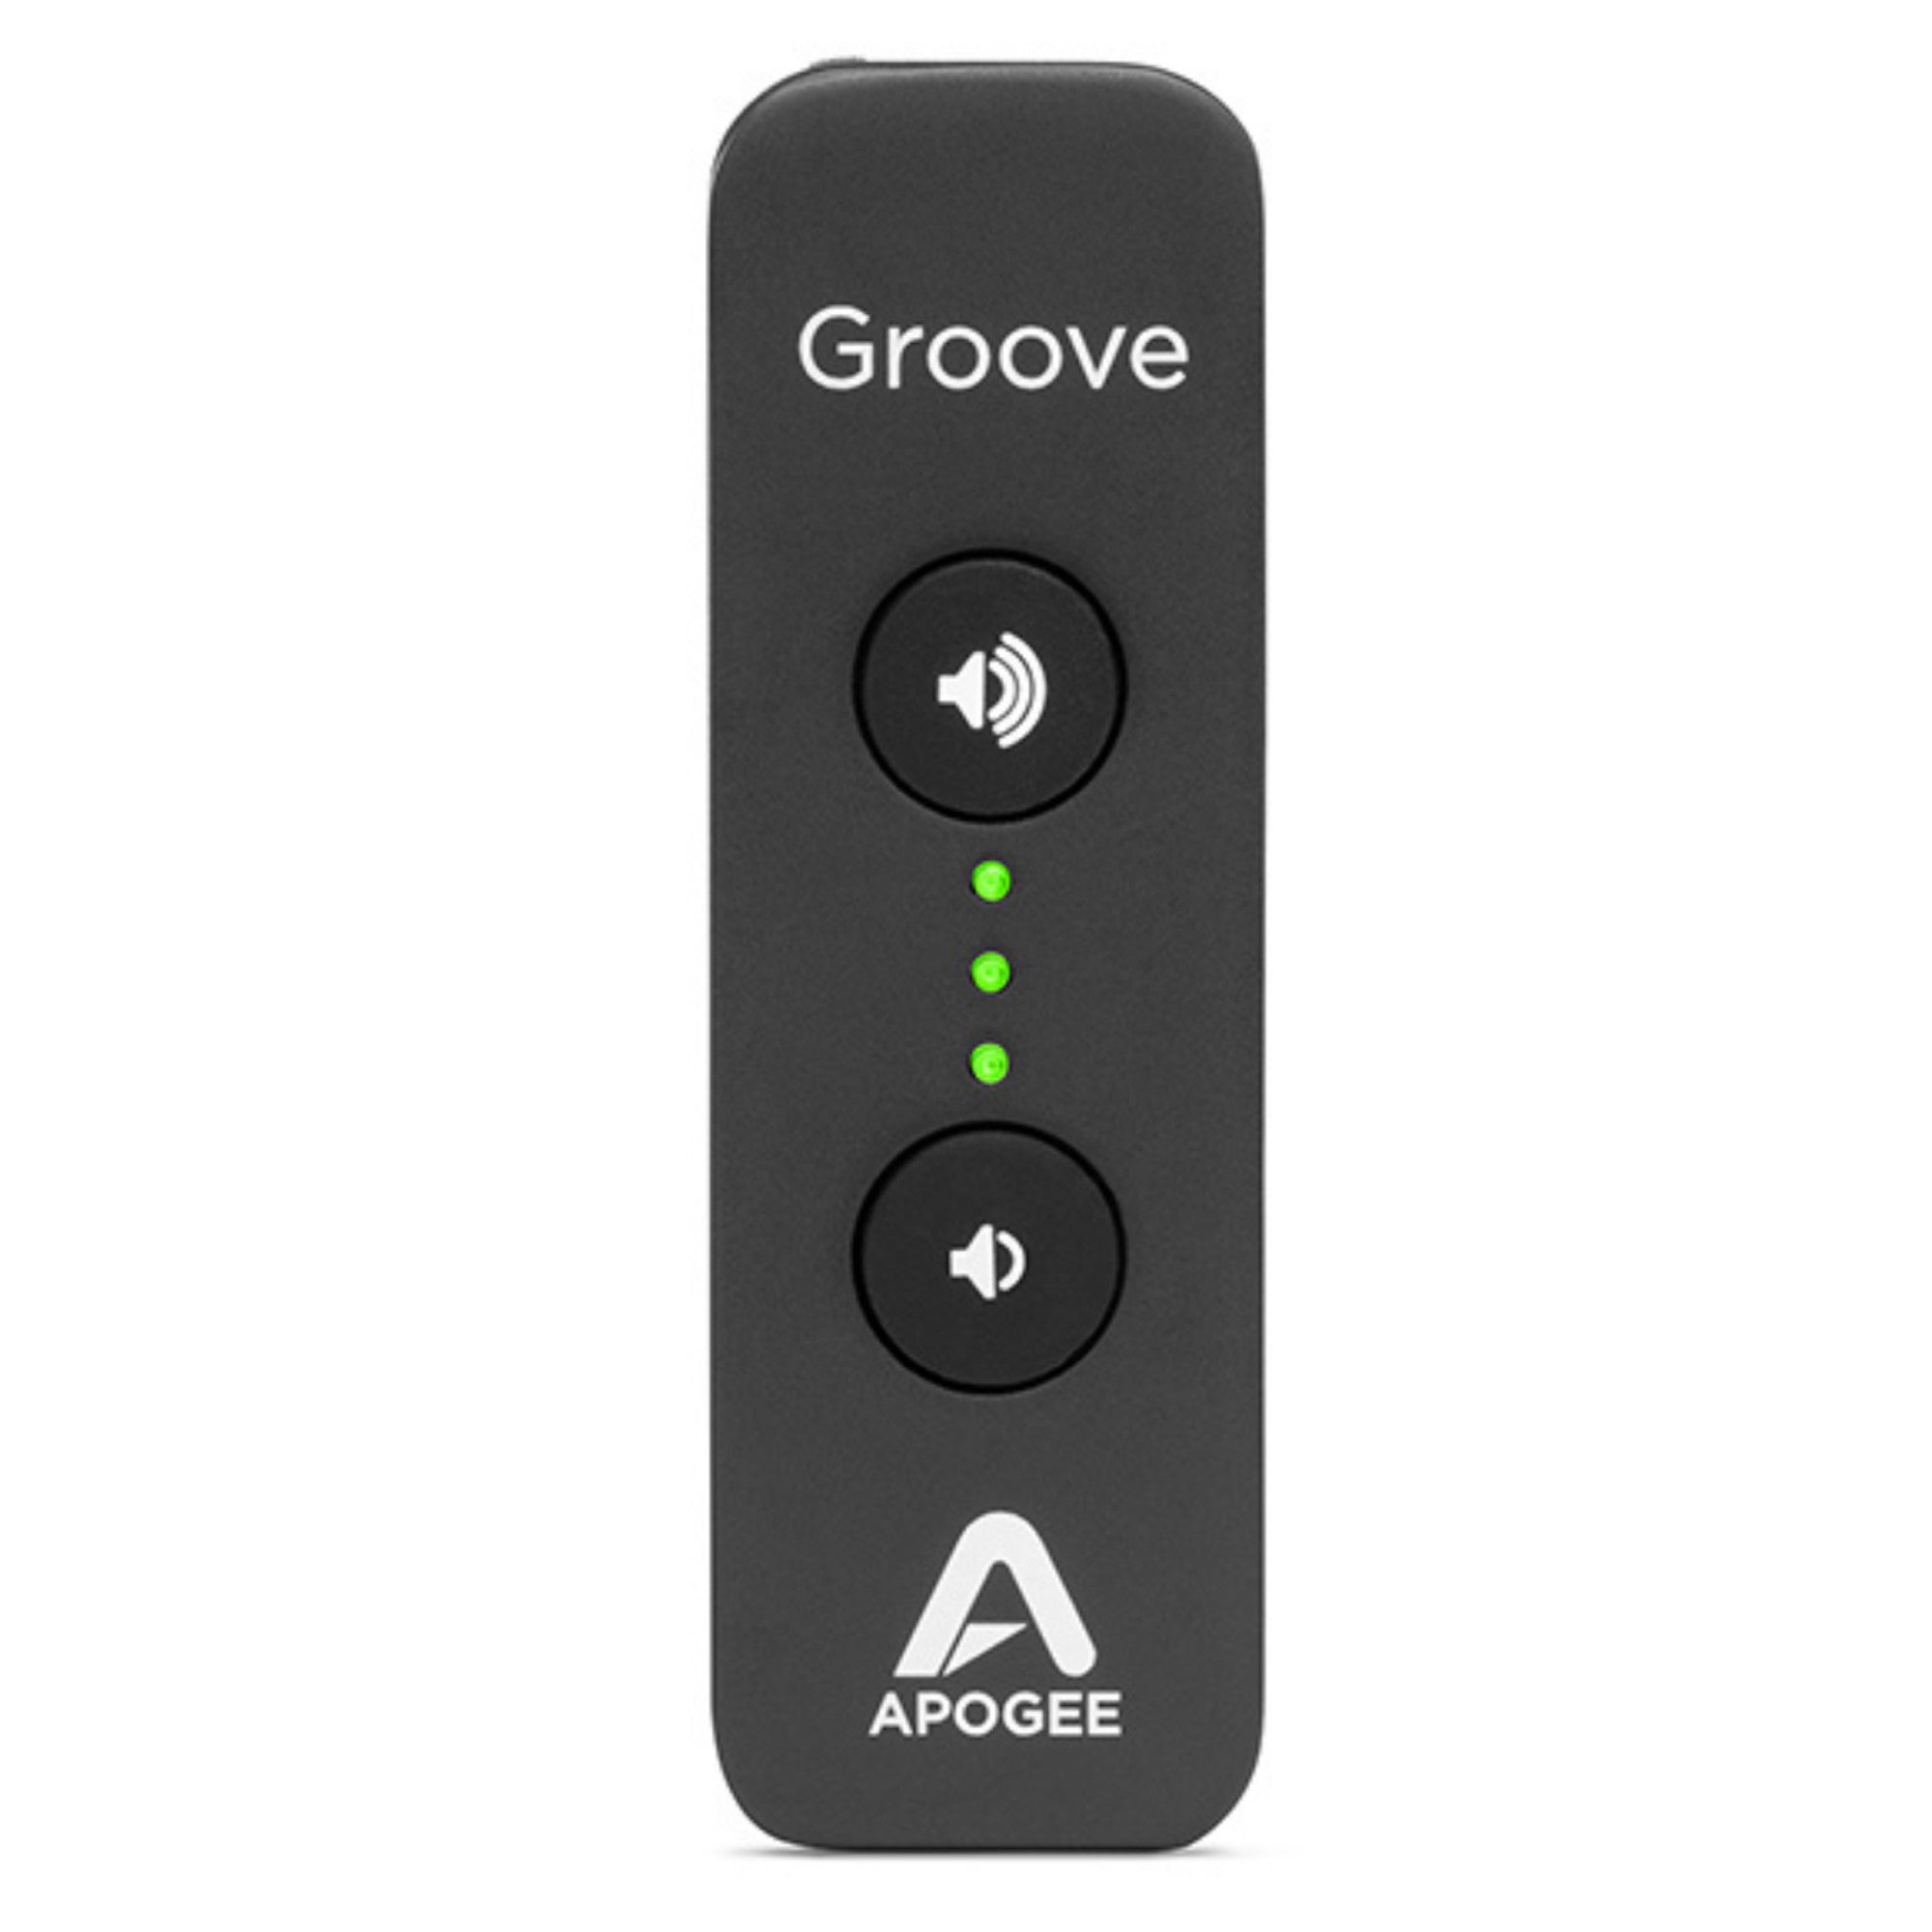 Apogee, Apogee Groove USB DAC and Headphone Amp